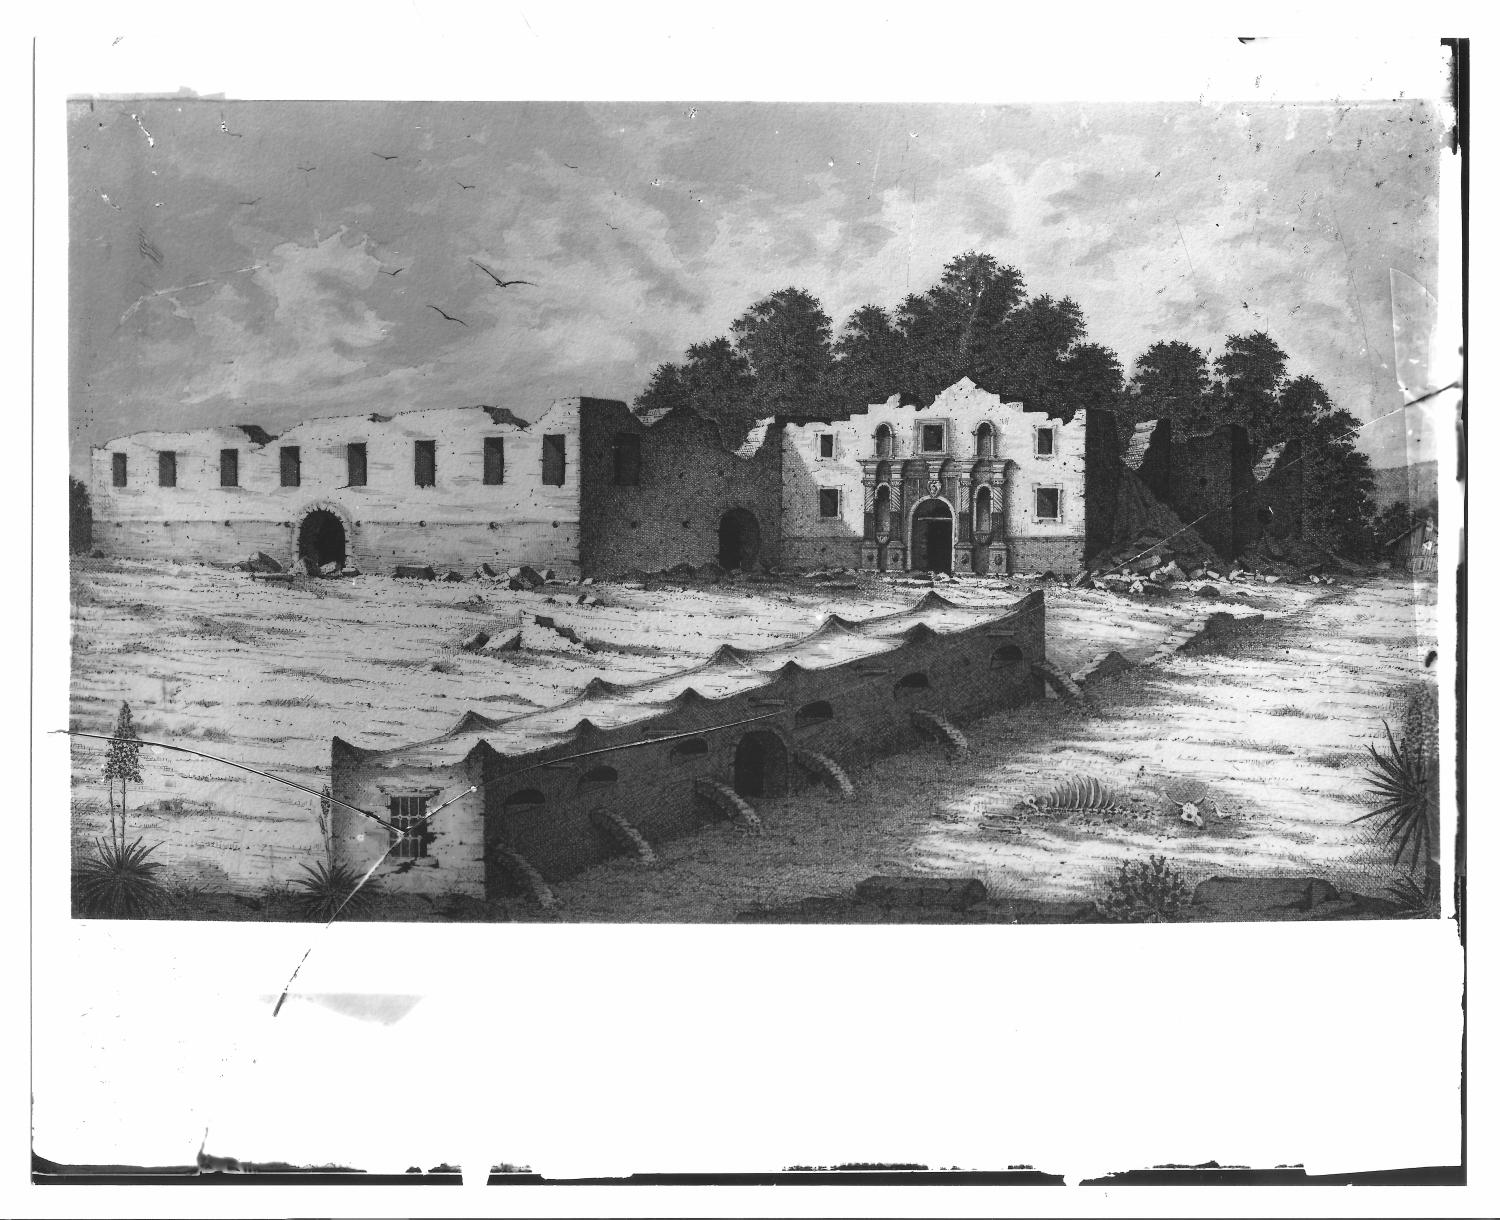 [The Alamo illustration] Side 1 of 2 The Portal to Texas History